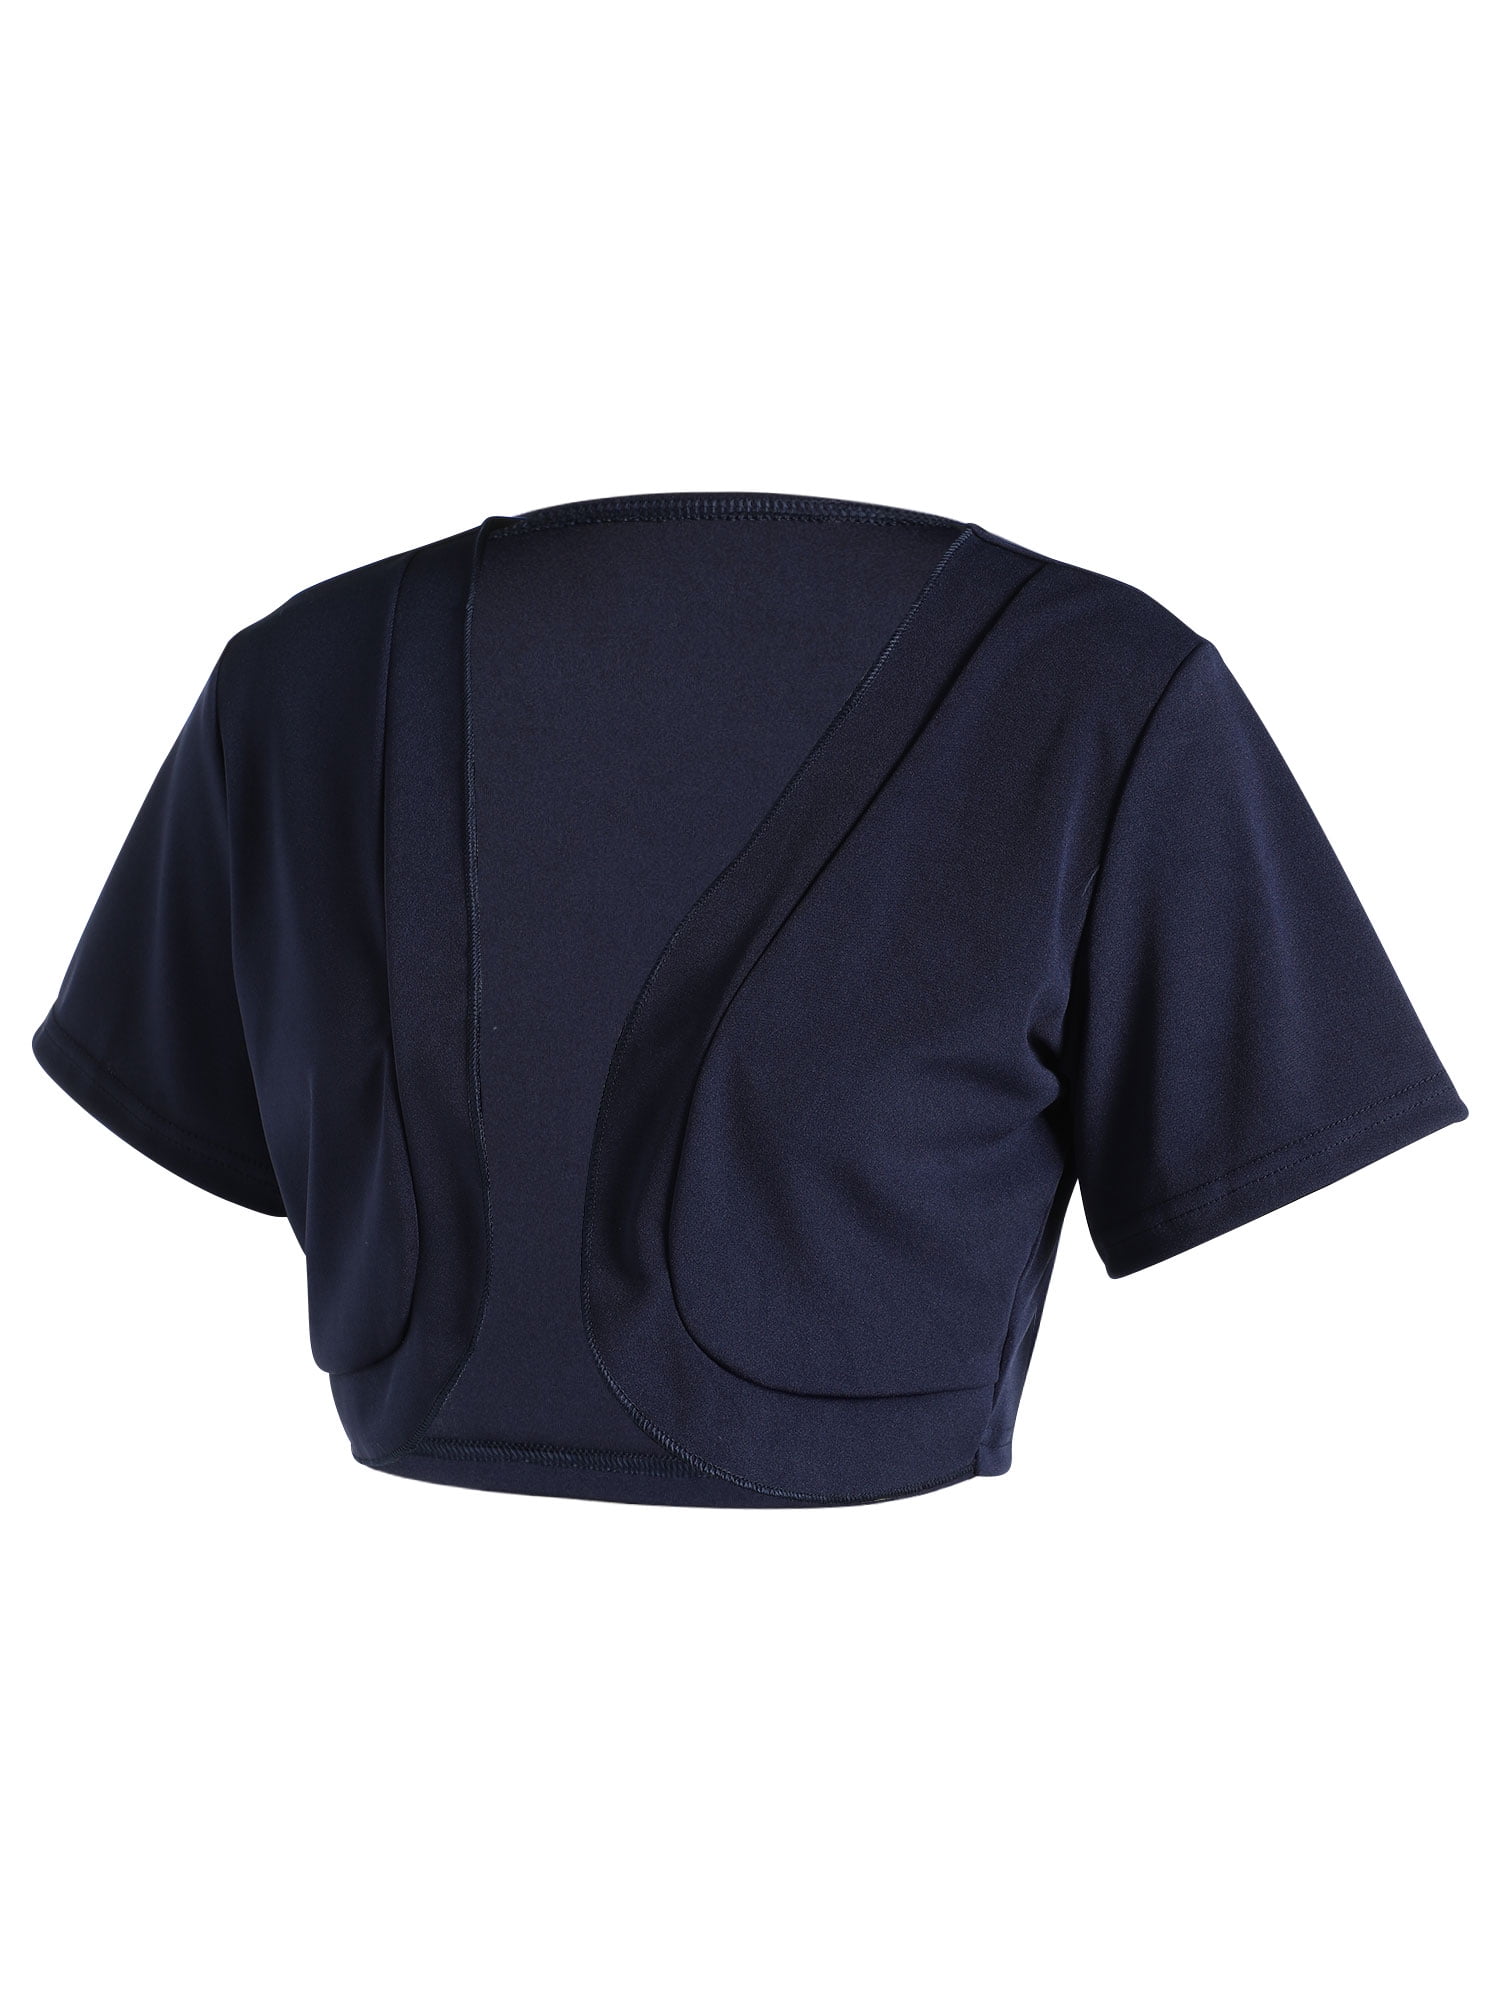 Women Bolero Cardigan Short Sleeve Solid Open Front Summer Cardigan Plus Size Casual Shrugs for Dresses